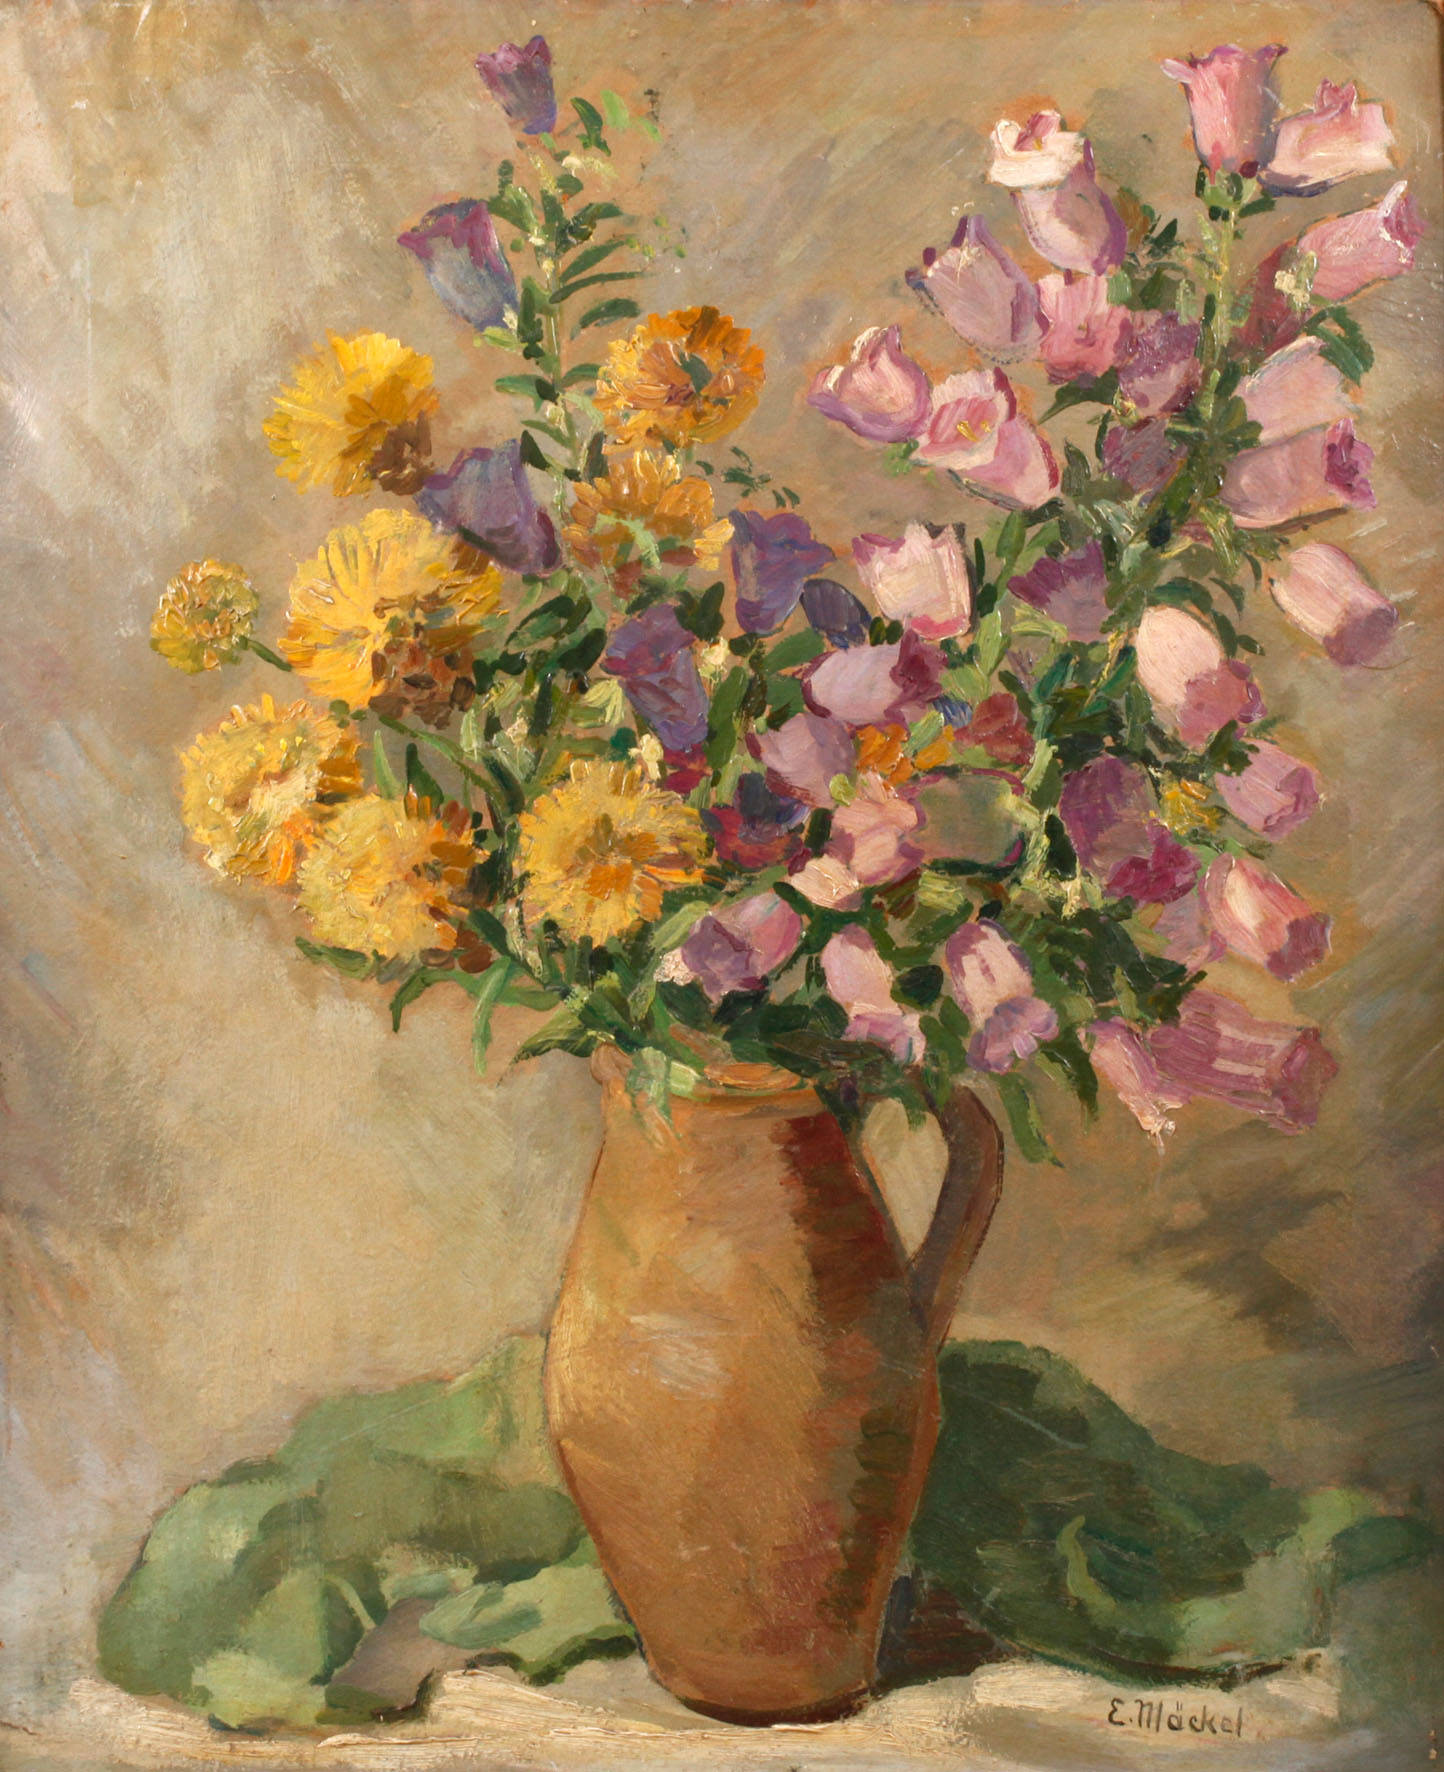 Elfriede Mäckel, ”Sommerblumen”